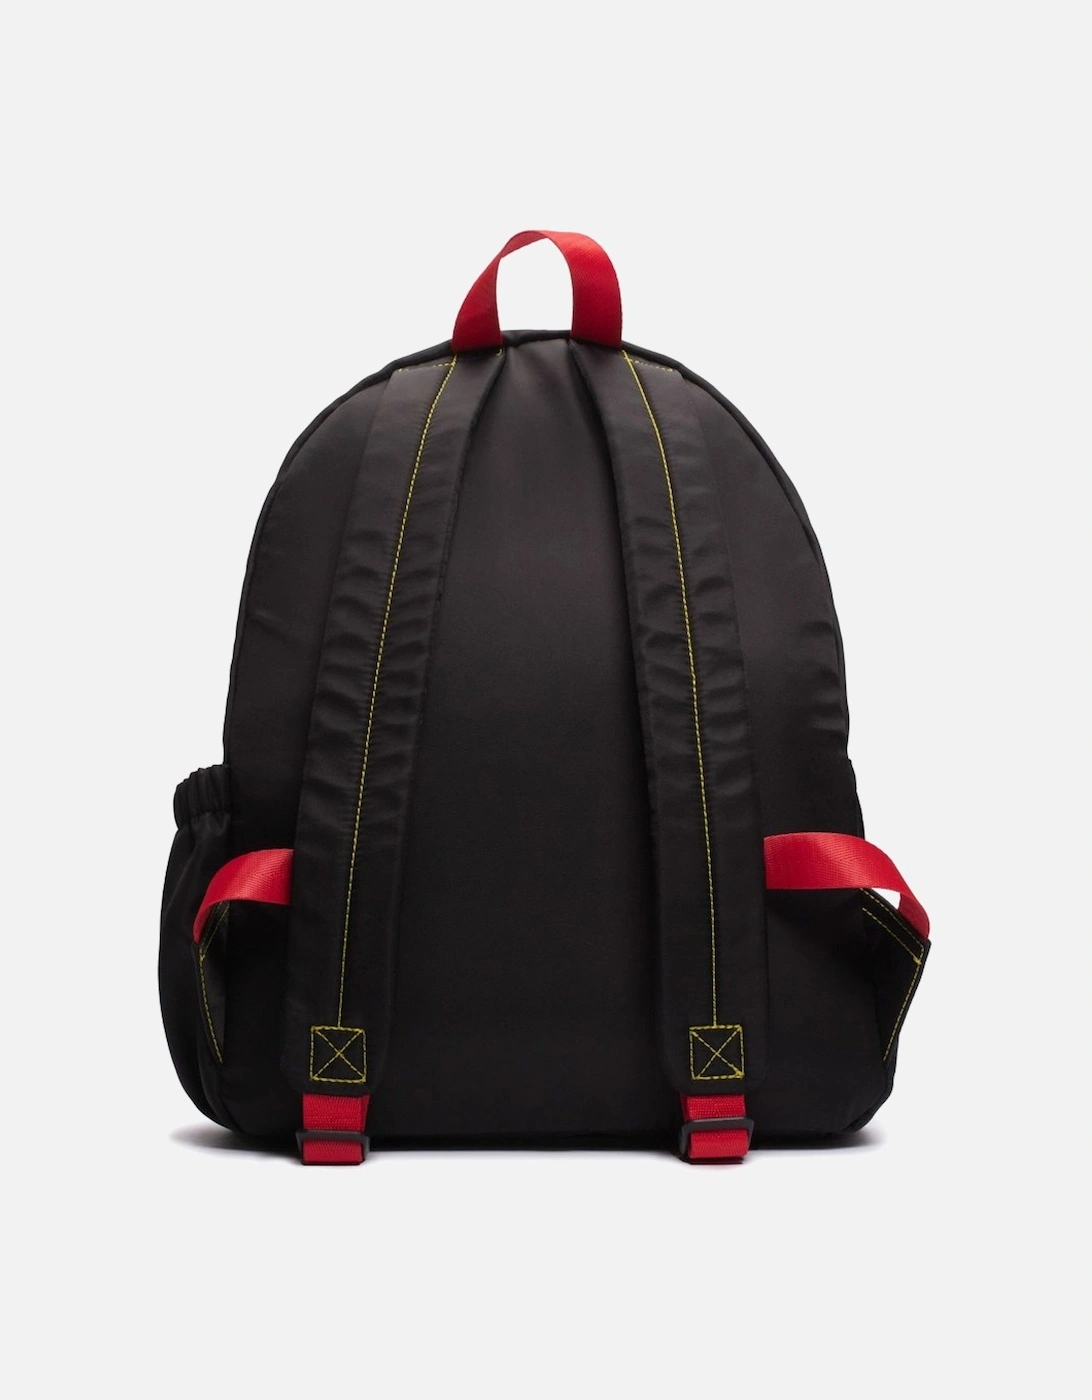 Hopper Kids Large Backpack